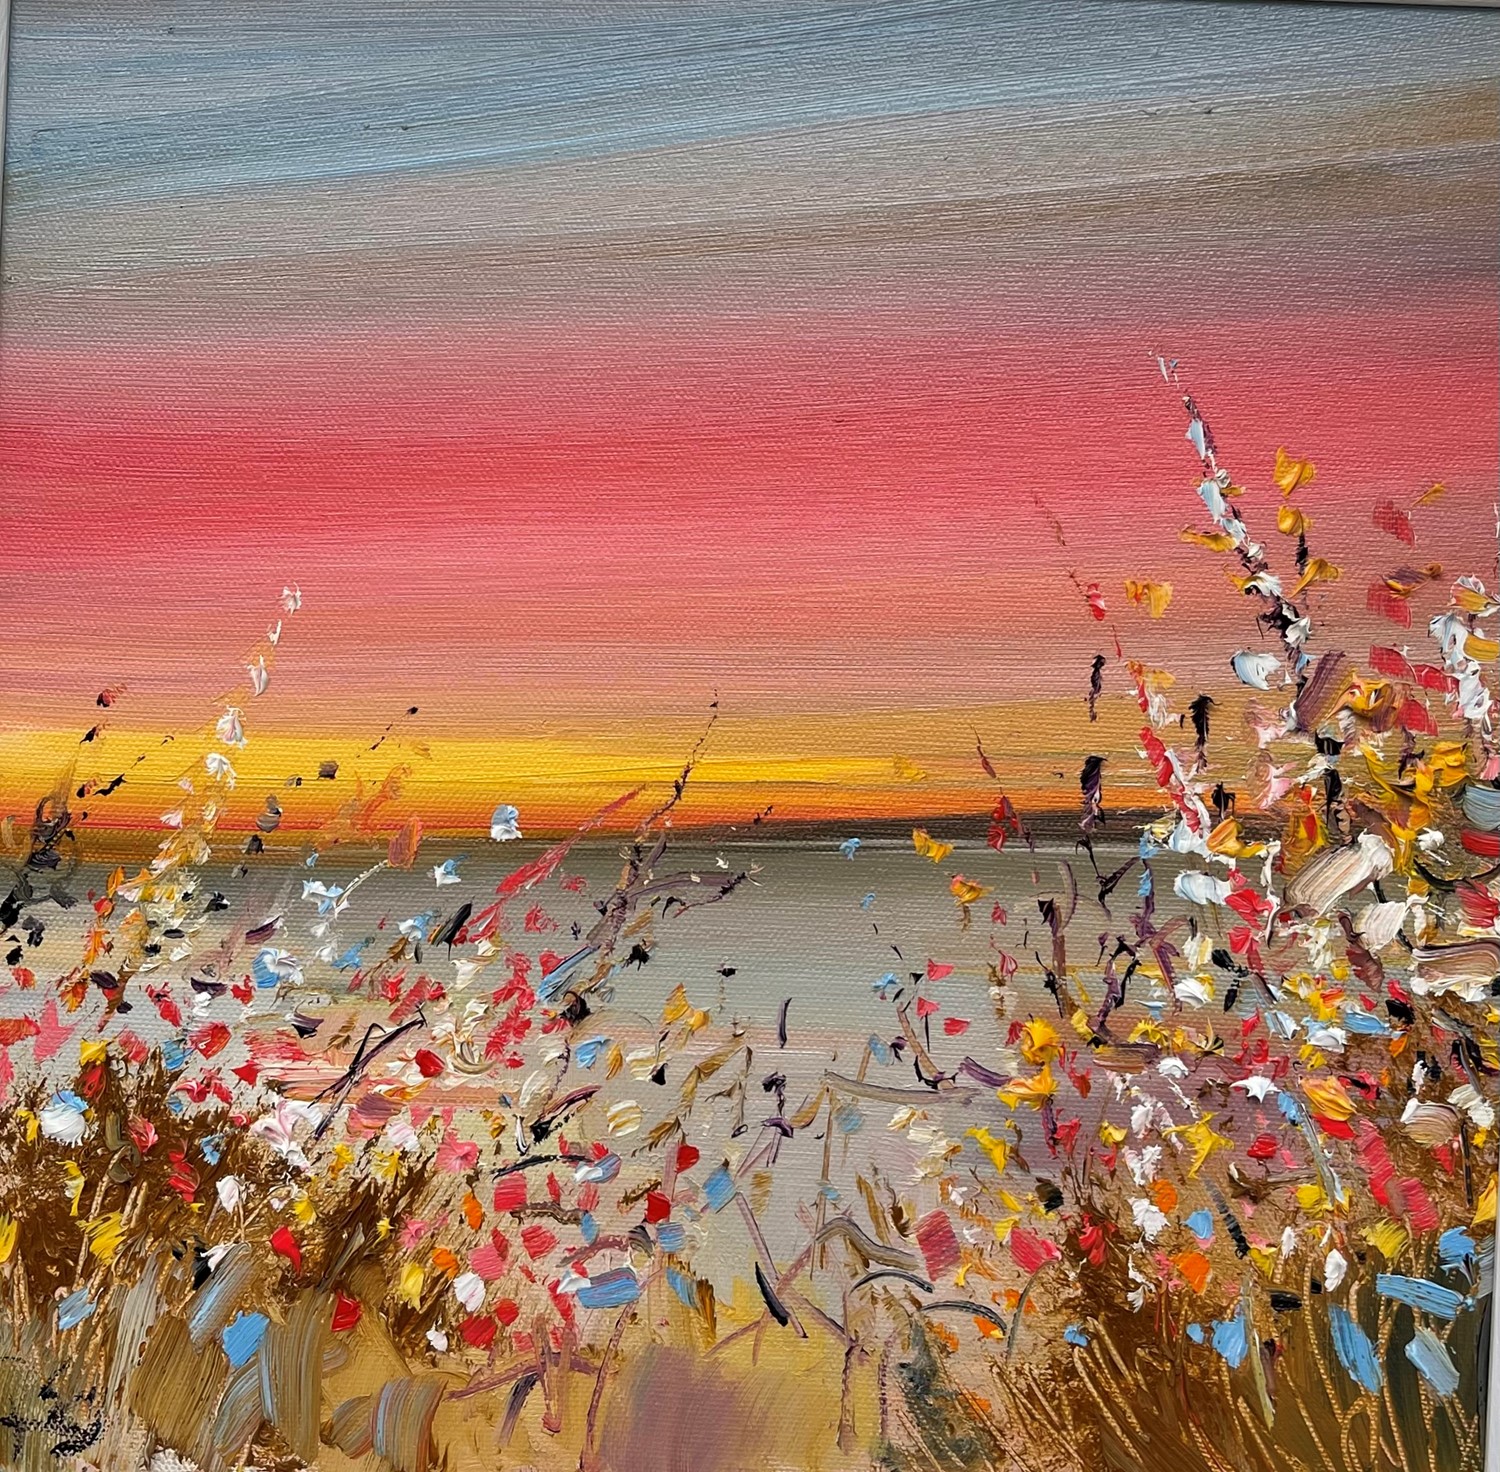 'A little burst of colour at sunset' by artist Rosanne Barr